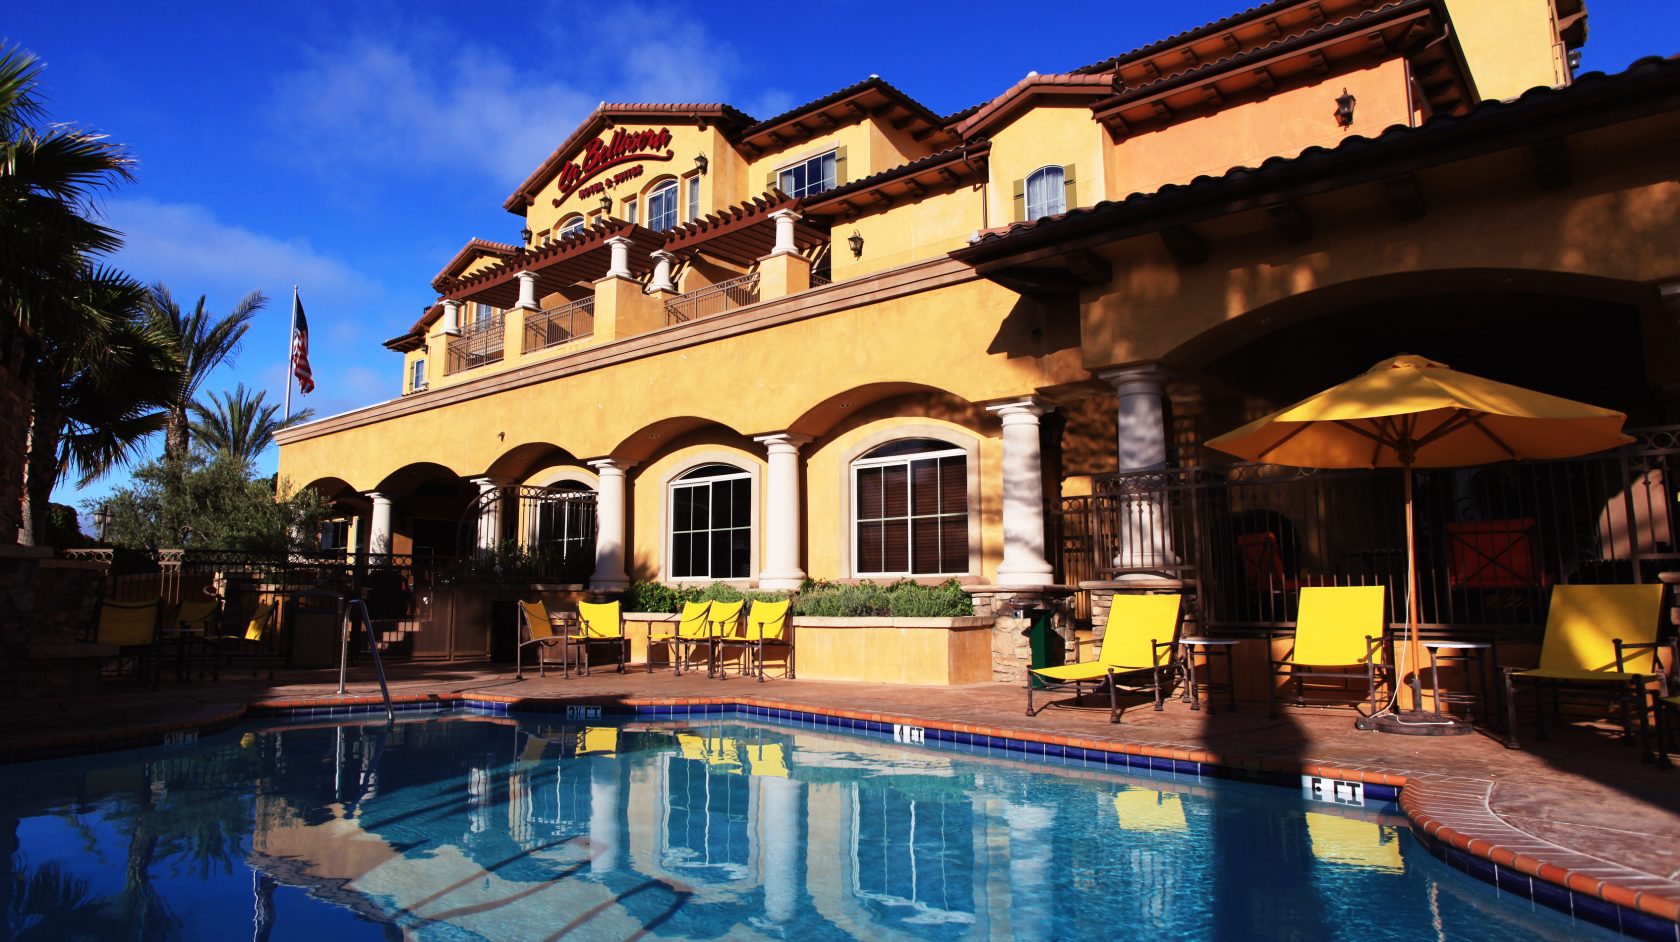 Photo of La Bellasera Hotel & Suites, Paso Robles, CA